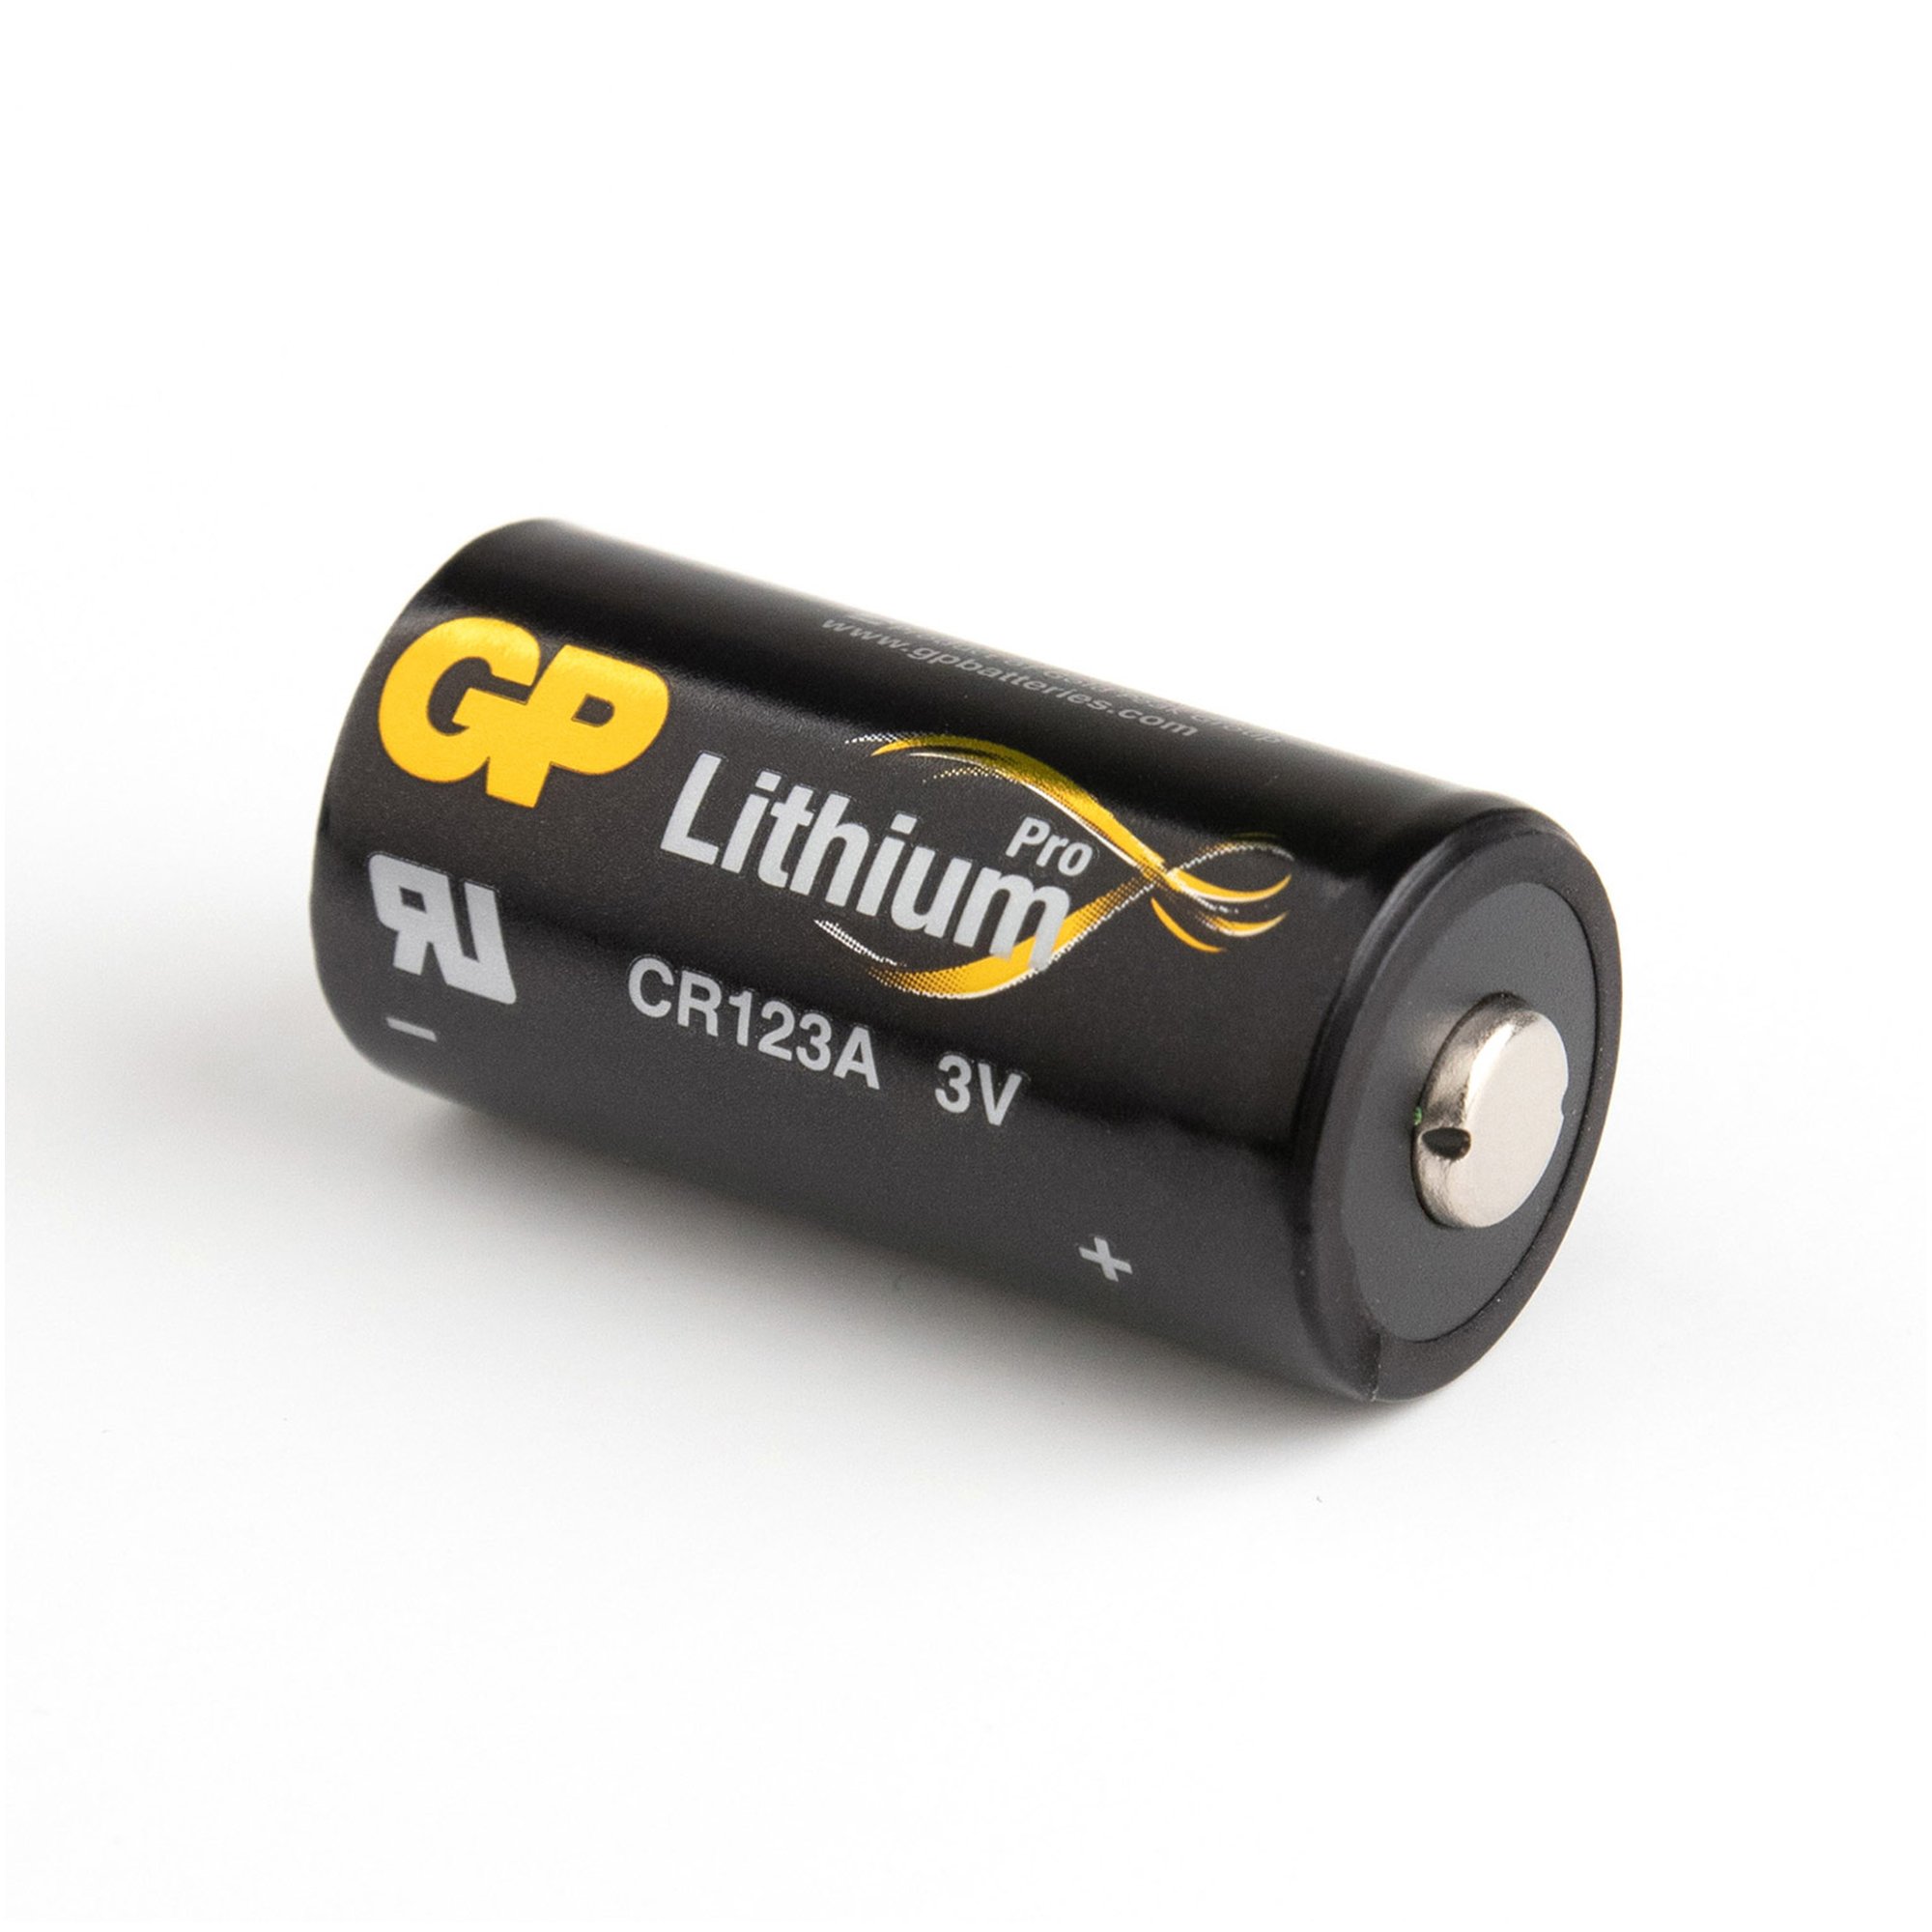 CR123A Batterie GP Lithium Pro 3V 2 Stück